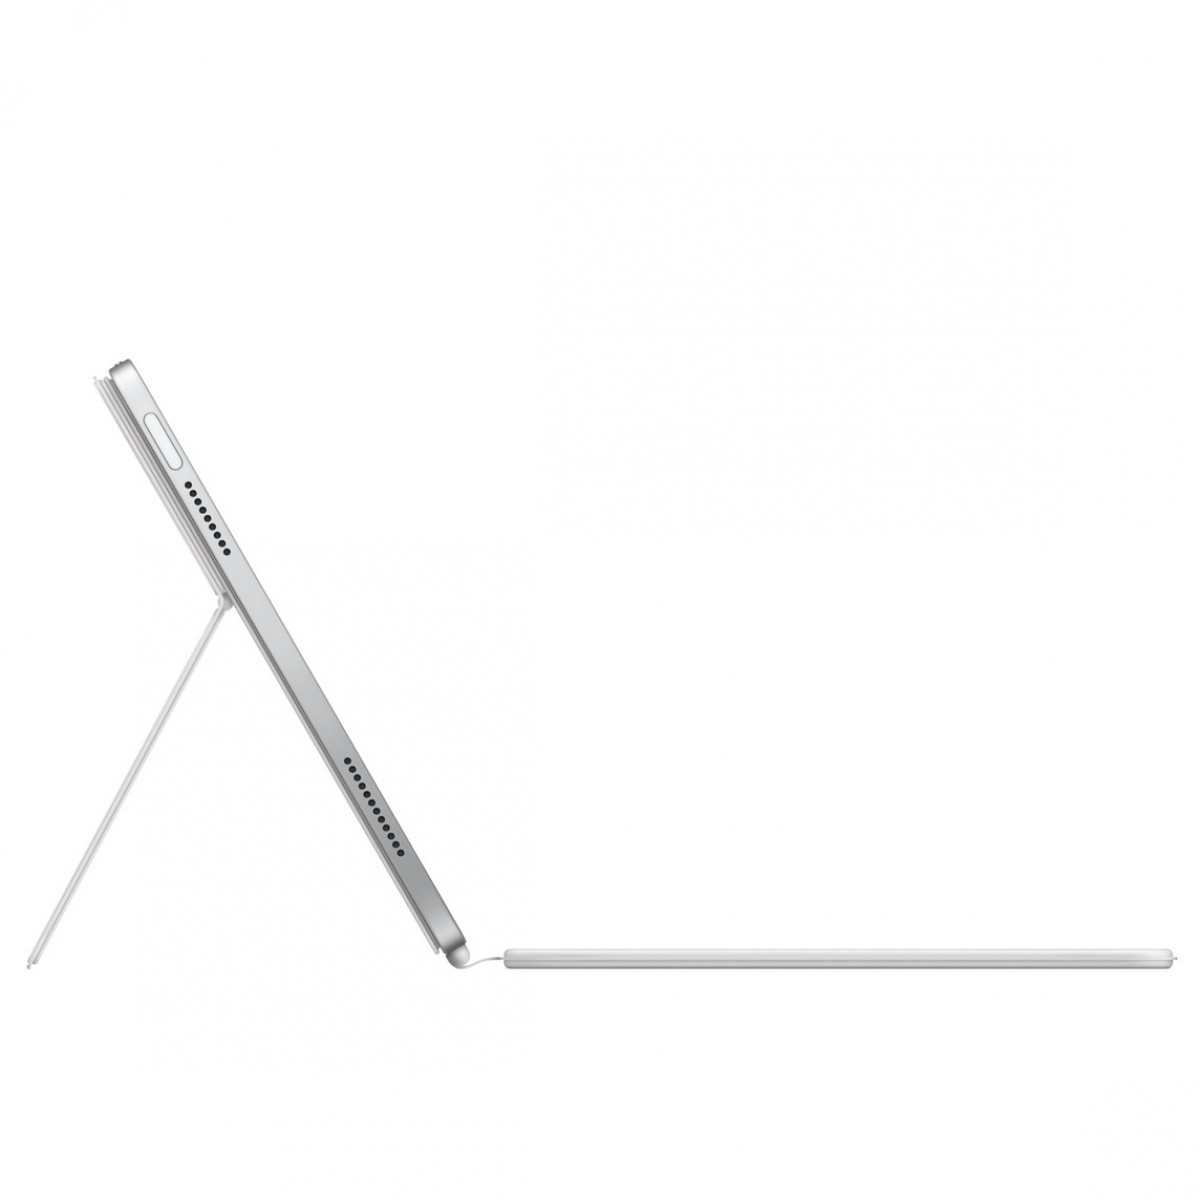 Magic Keyboard Folio для iPad (10-го поколения) - Белая